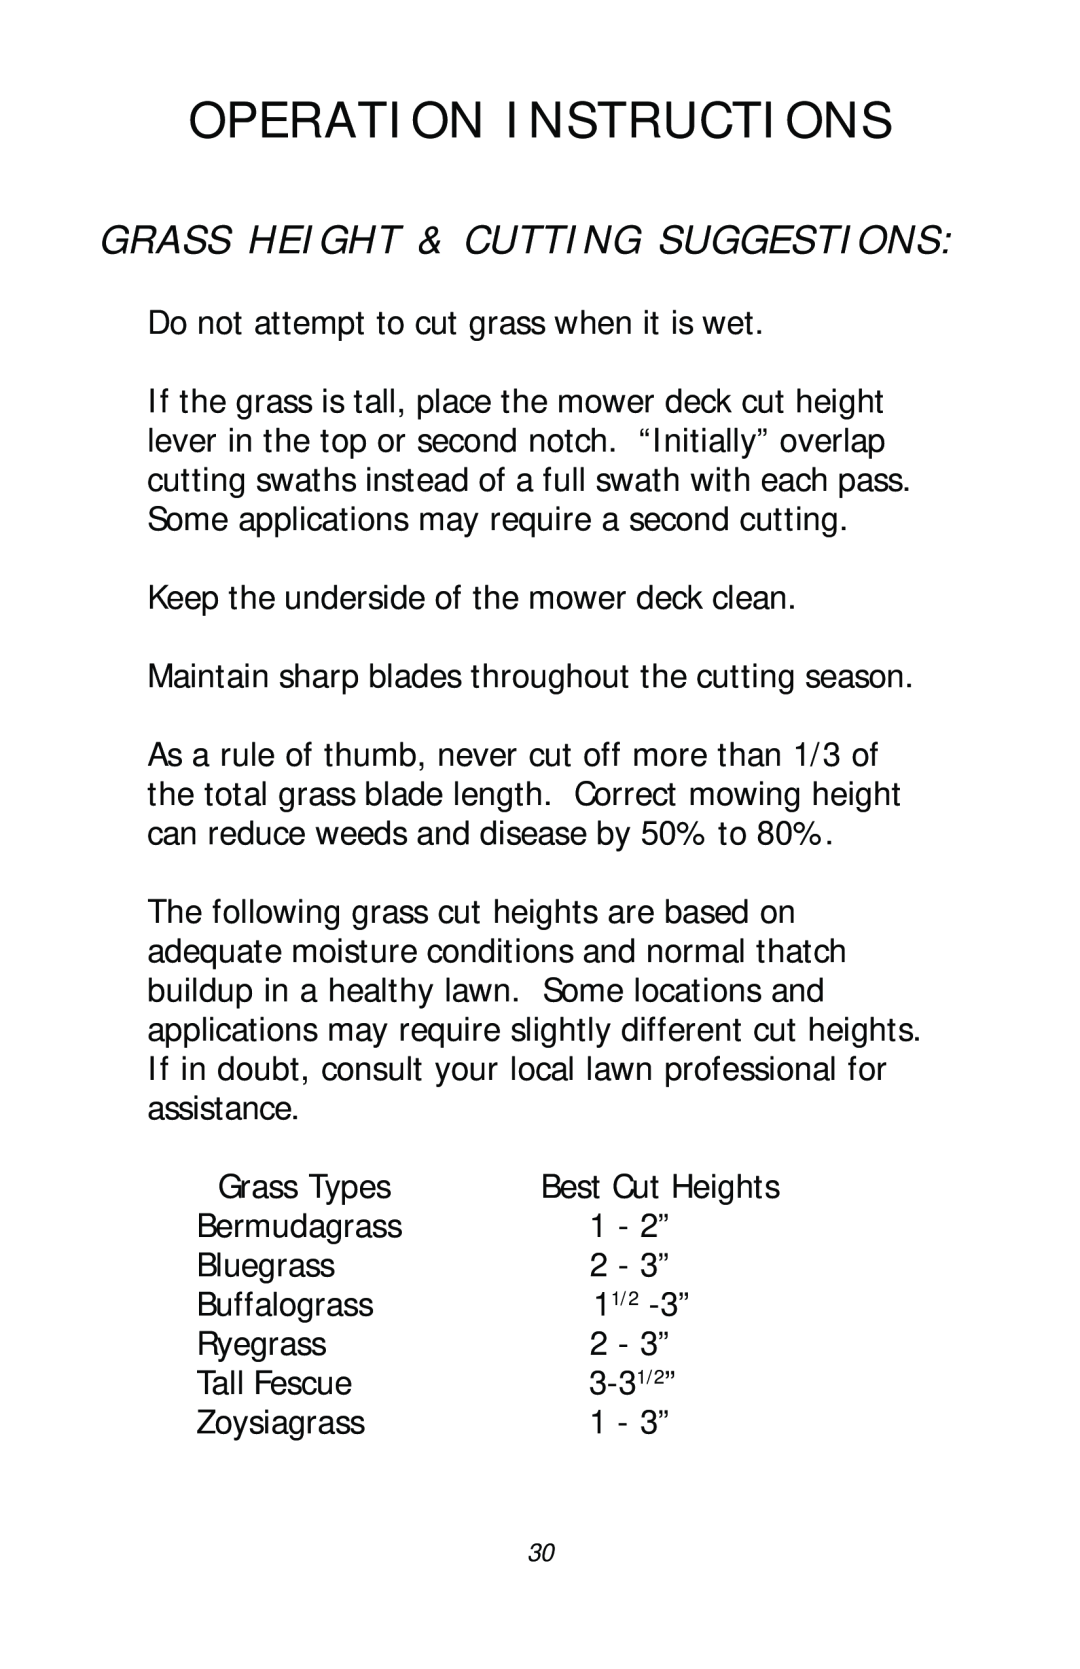 Dixon ZTR RAM 50, 17411-1103 manual Grass Height & Cutting Suggestions, Operation Instructions 